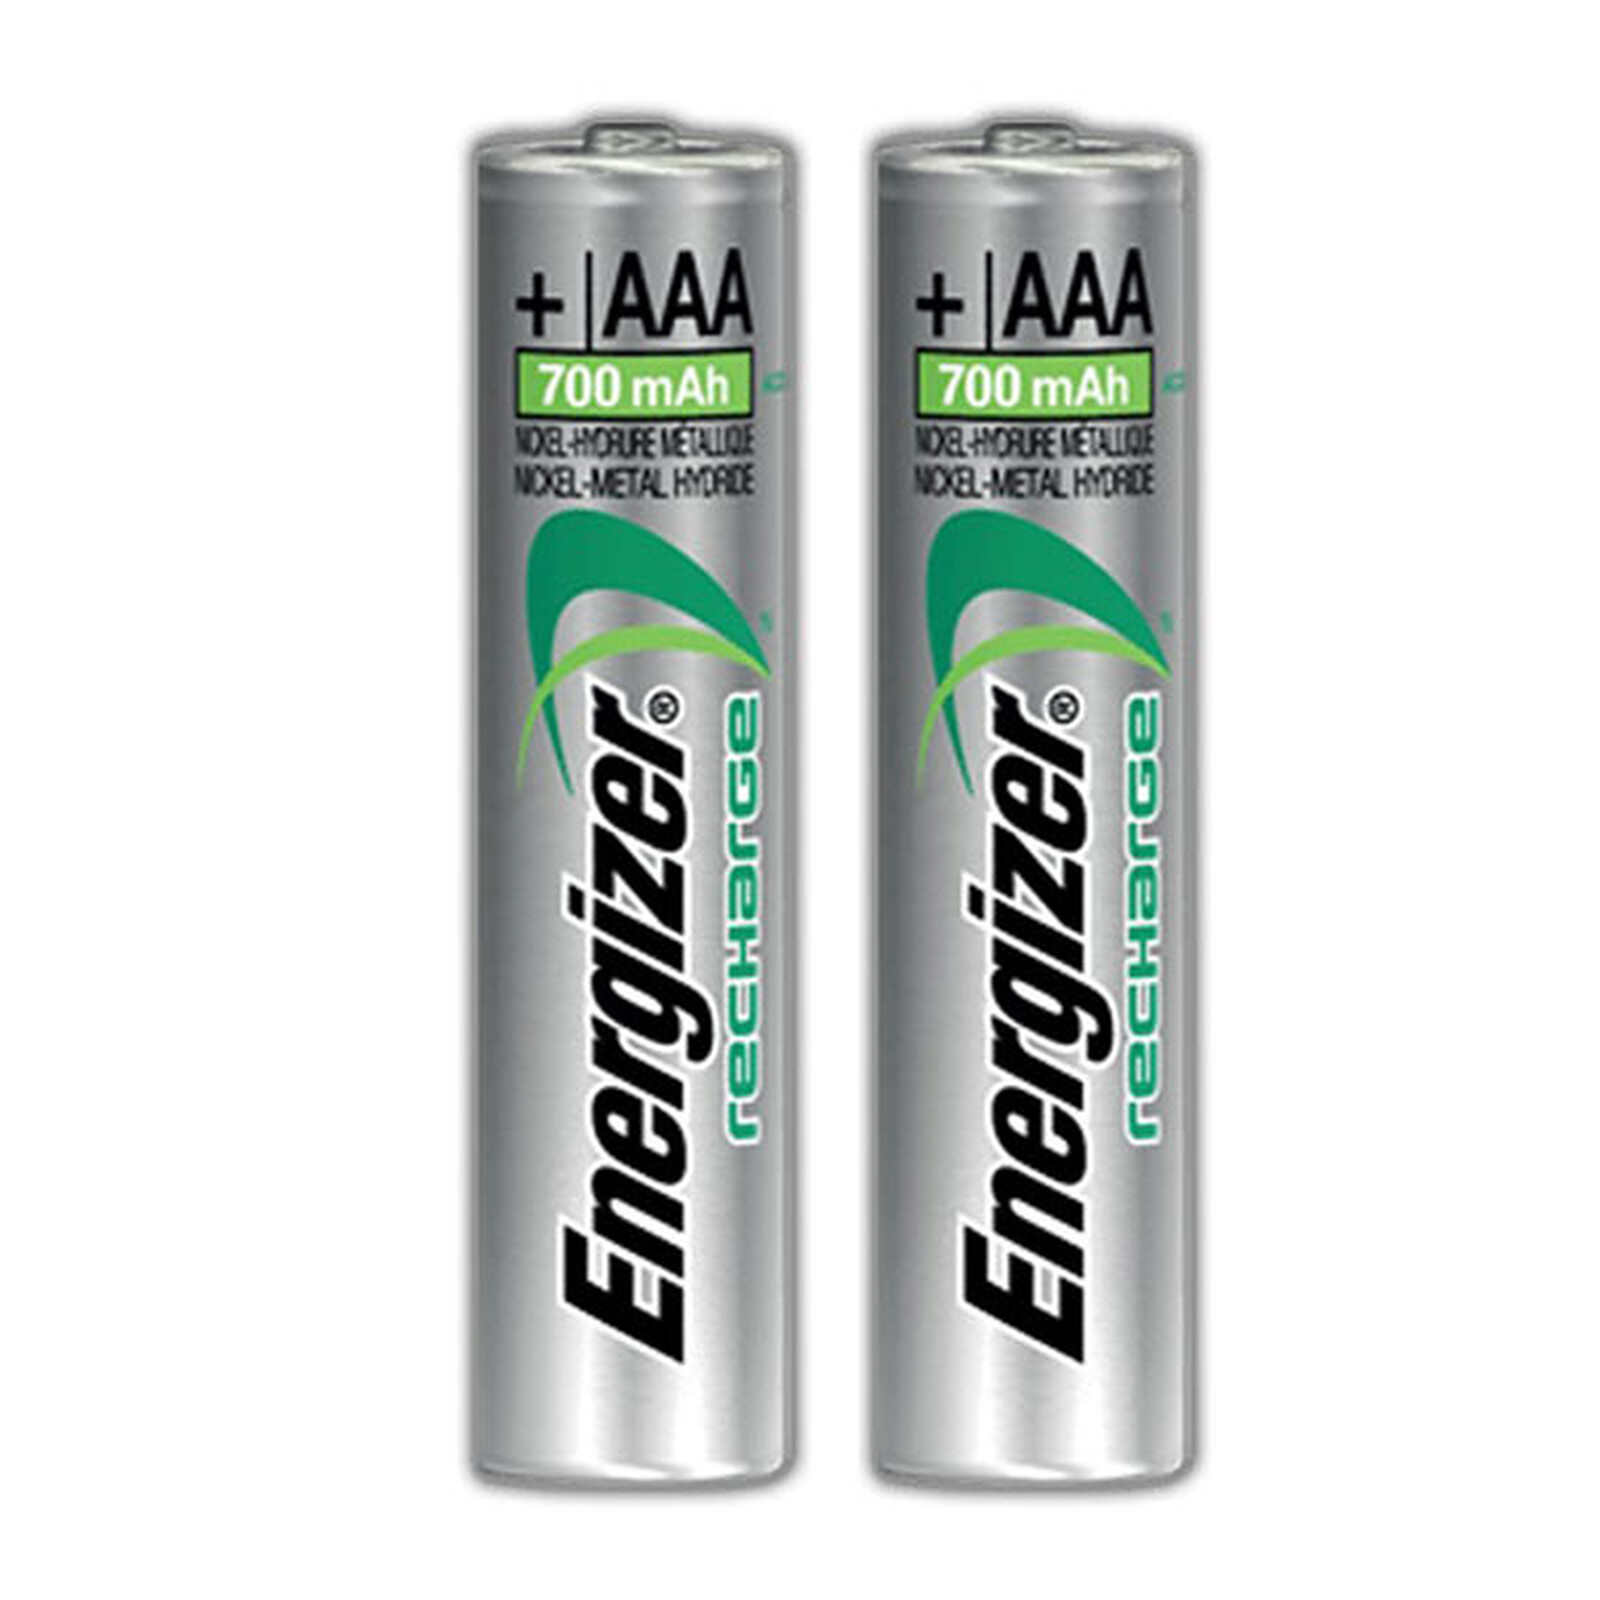 Energizer Accu Recharge Mini - Pile & chargeur - LDLC